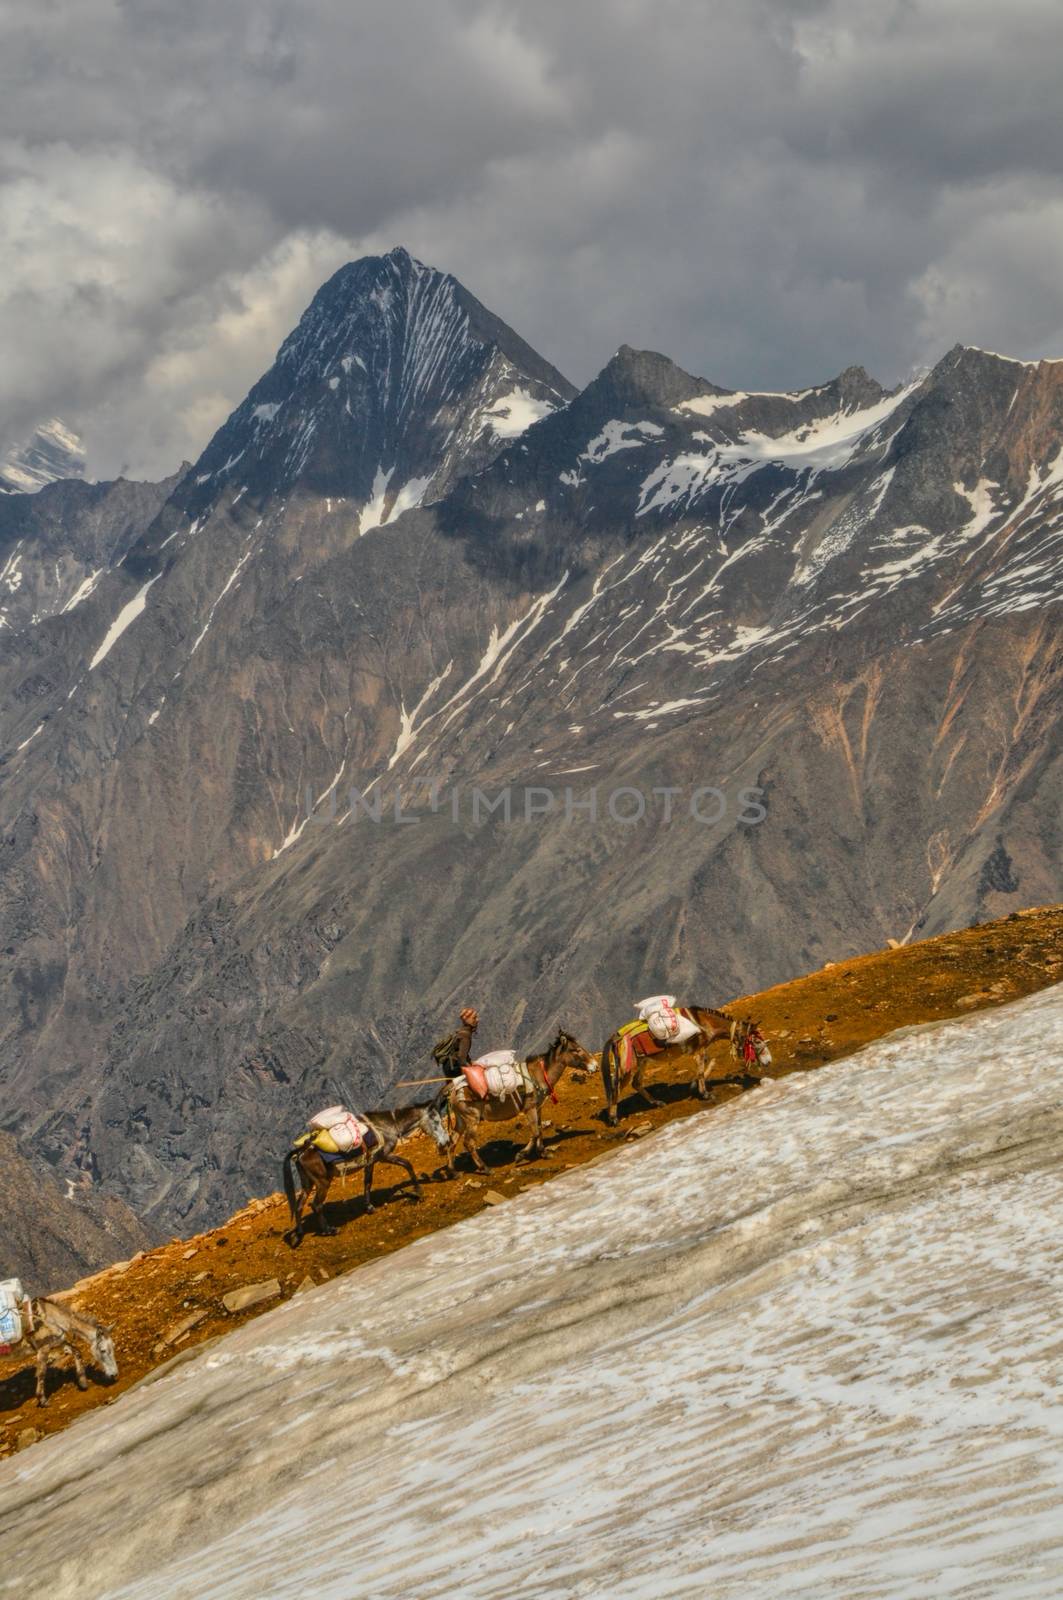 Donkeys in Himalayas by MichalKnitl